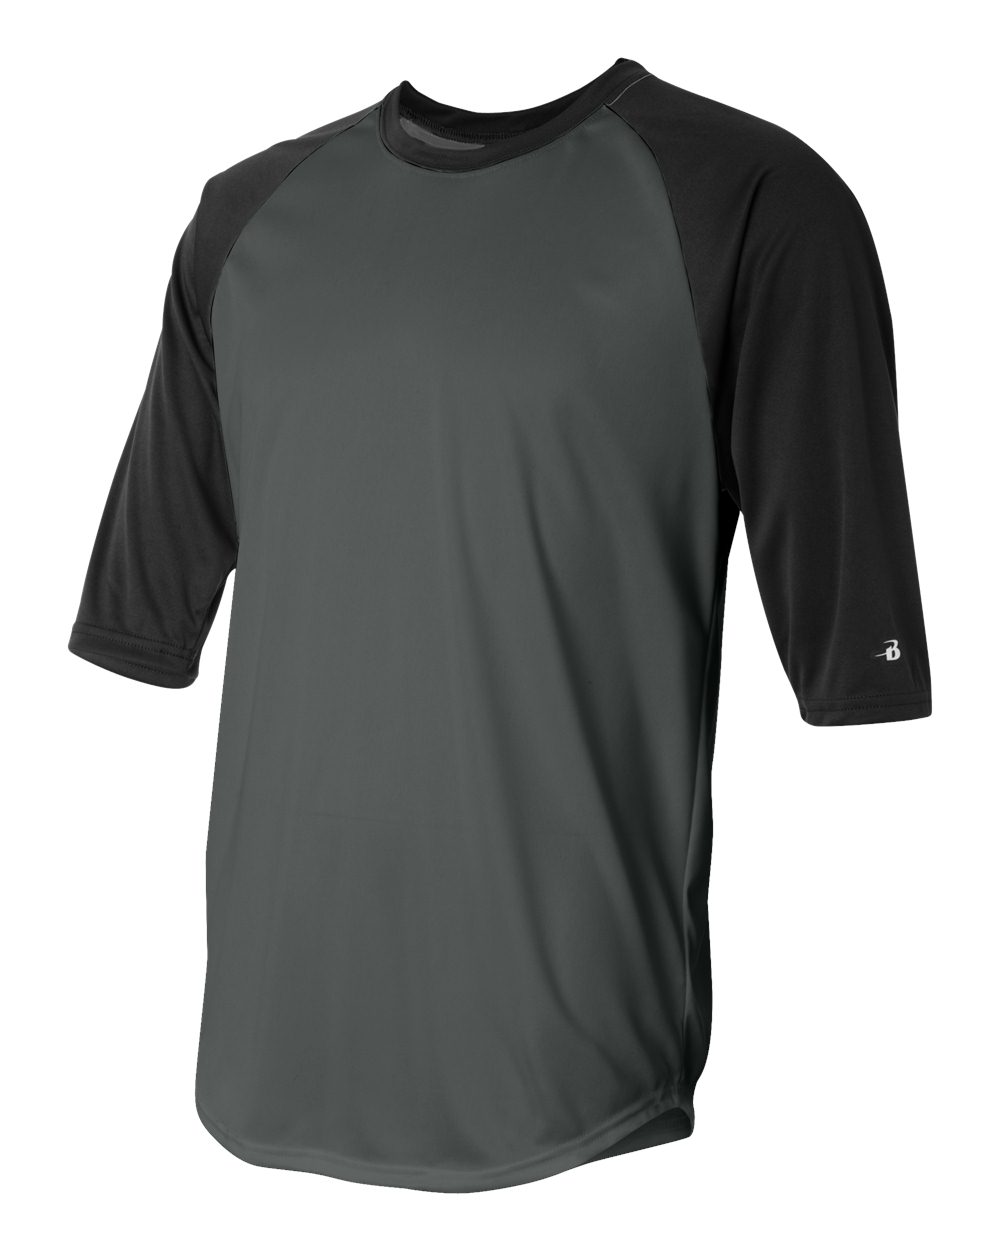 Badger 4133 - B-Core 3/4 Sleeve Baseball Undershirt